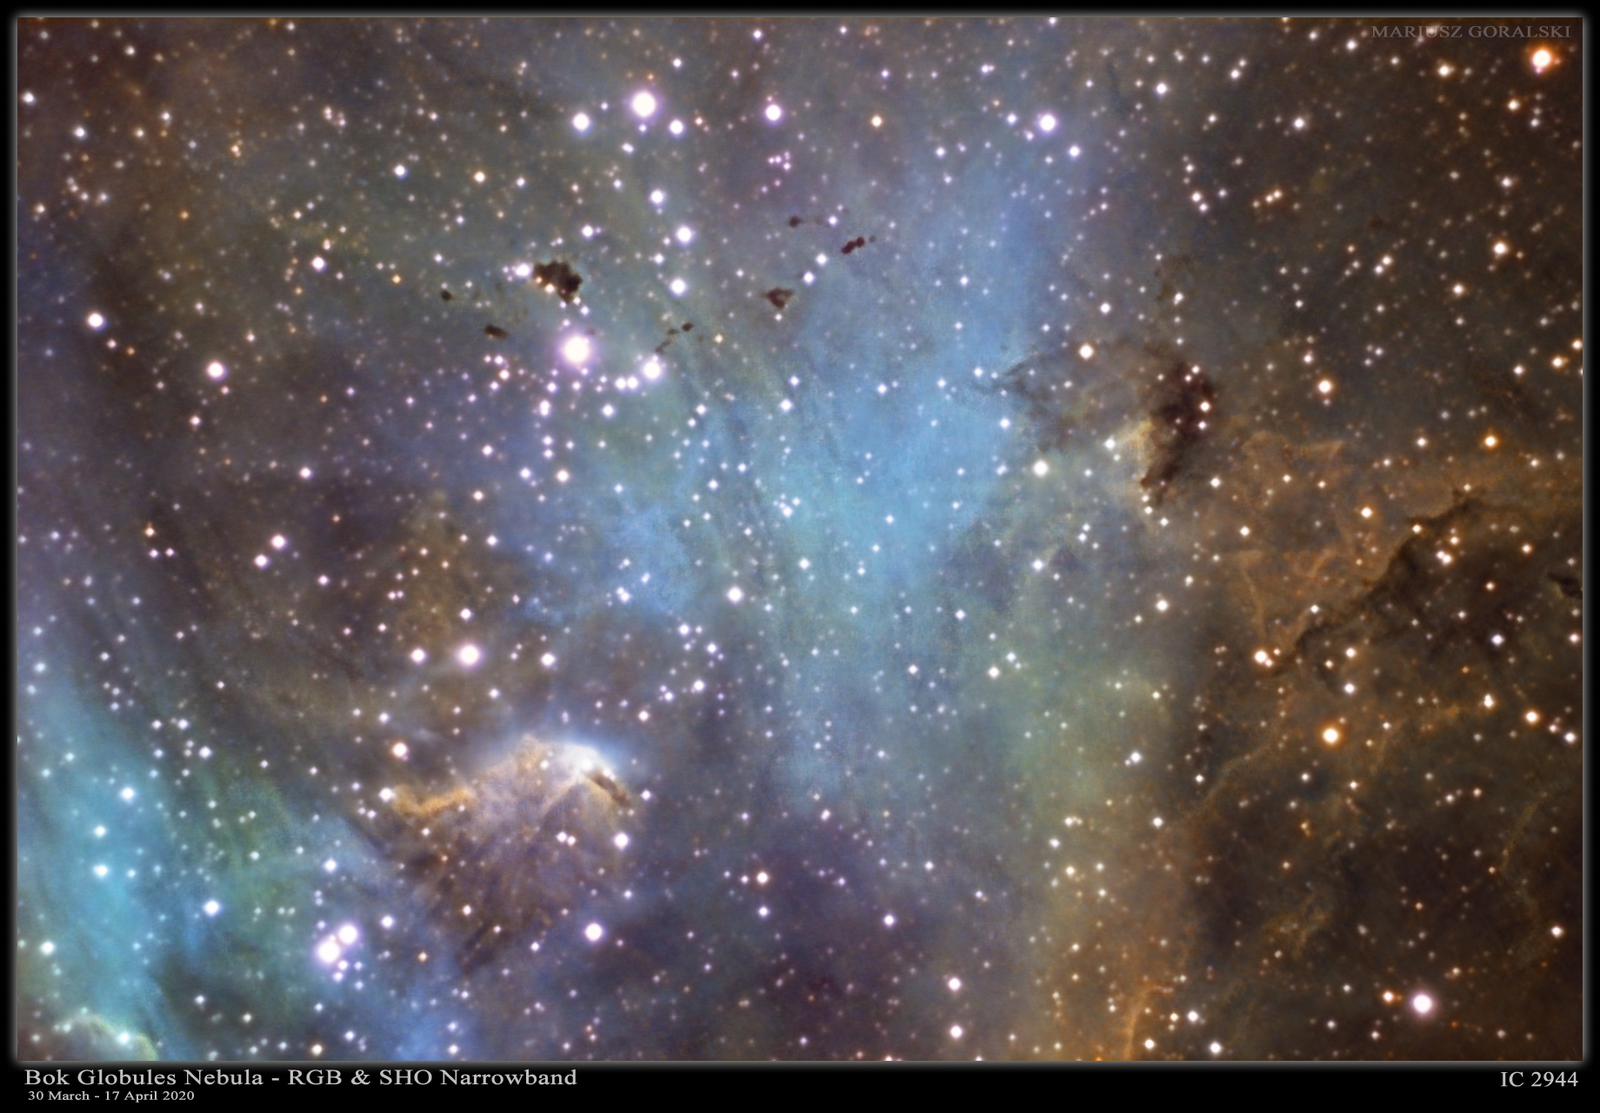 Bok Globules in IC2944 (Running Chicken Nebula) - April 2020